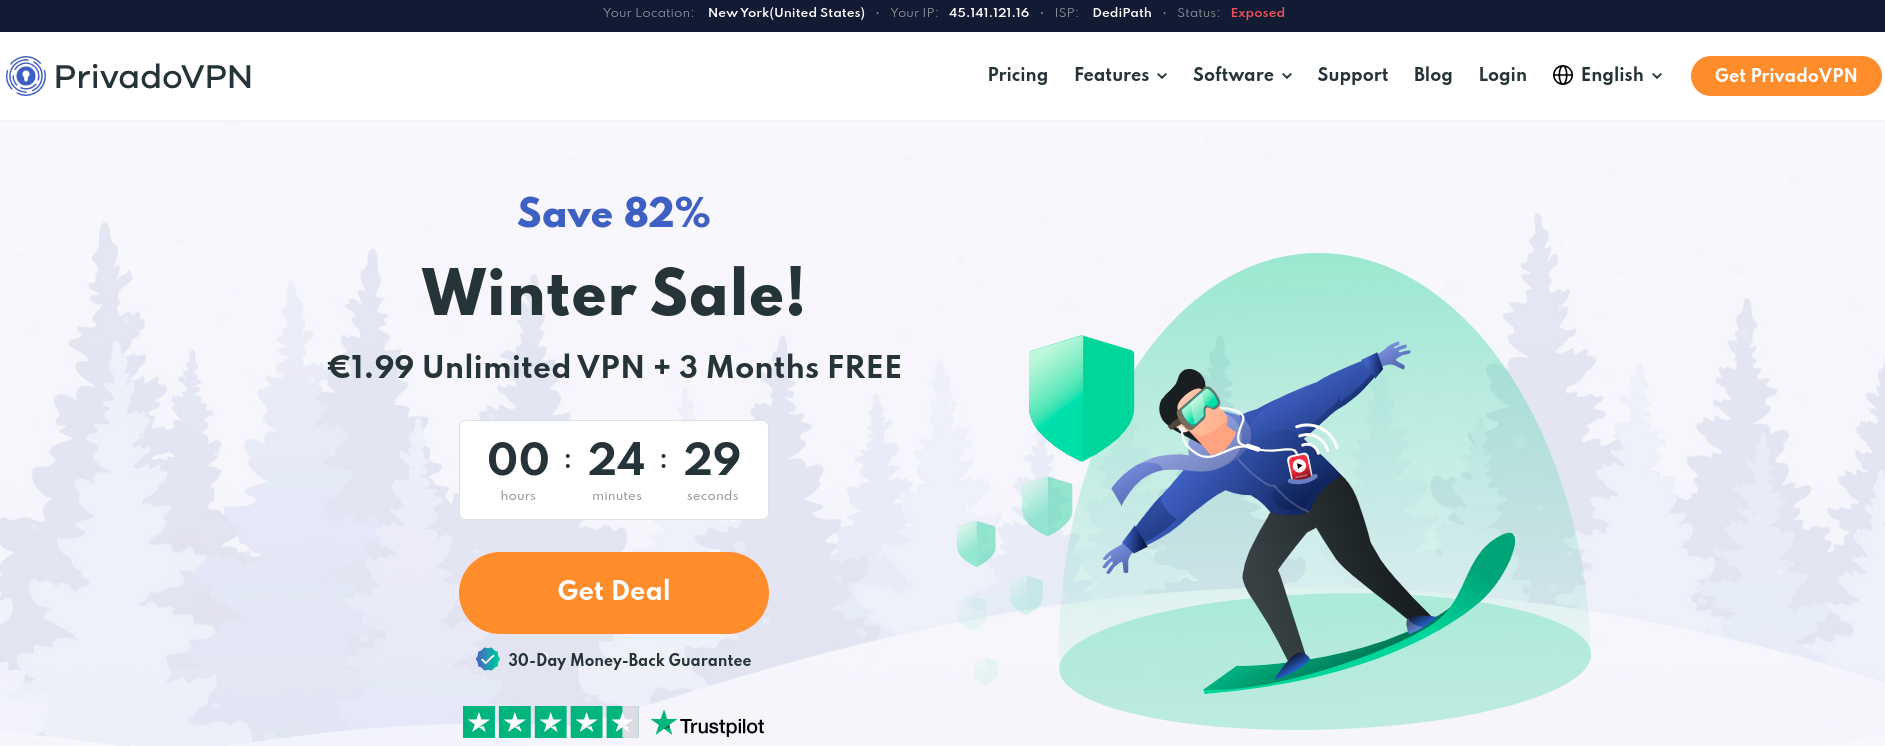 PrivadoVPN Winter Sale Deal